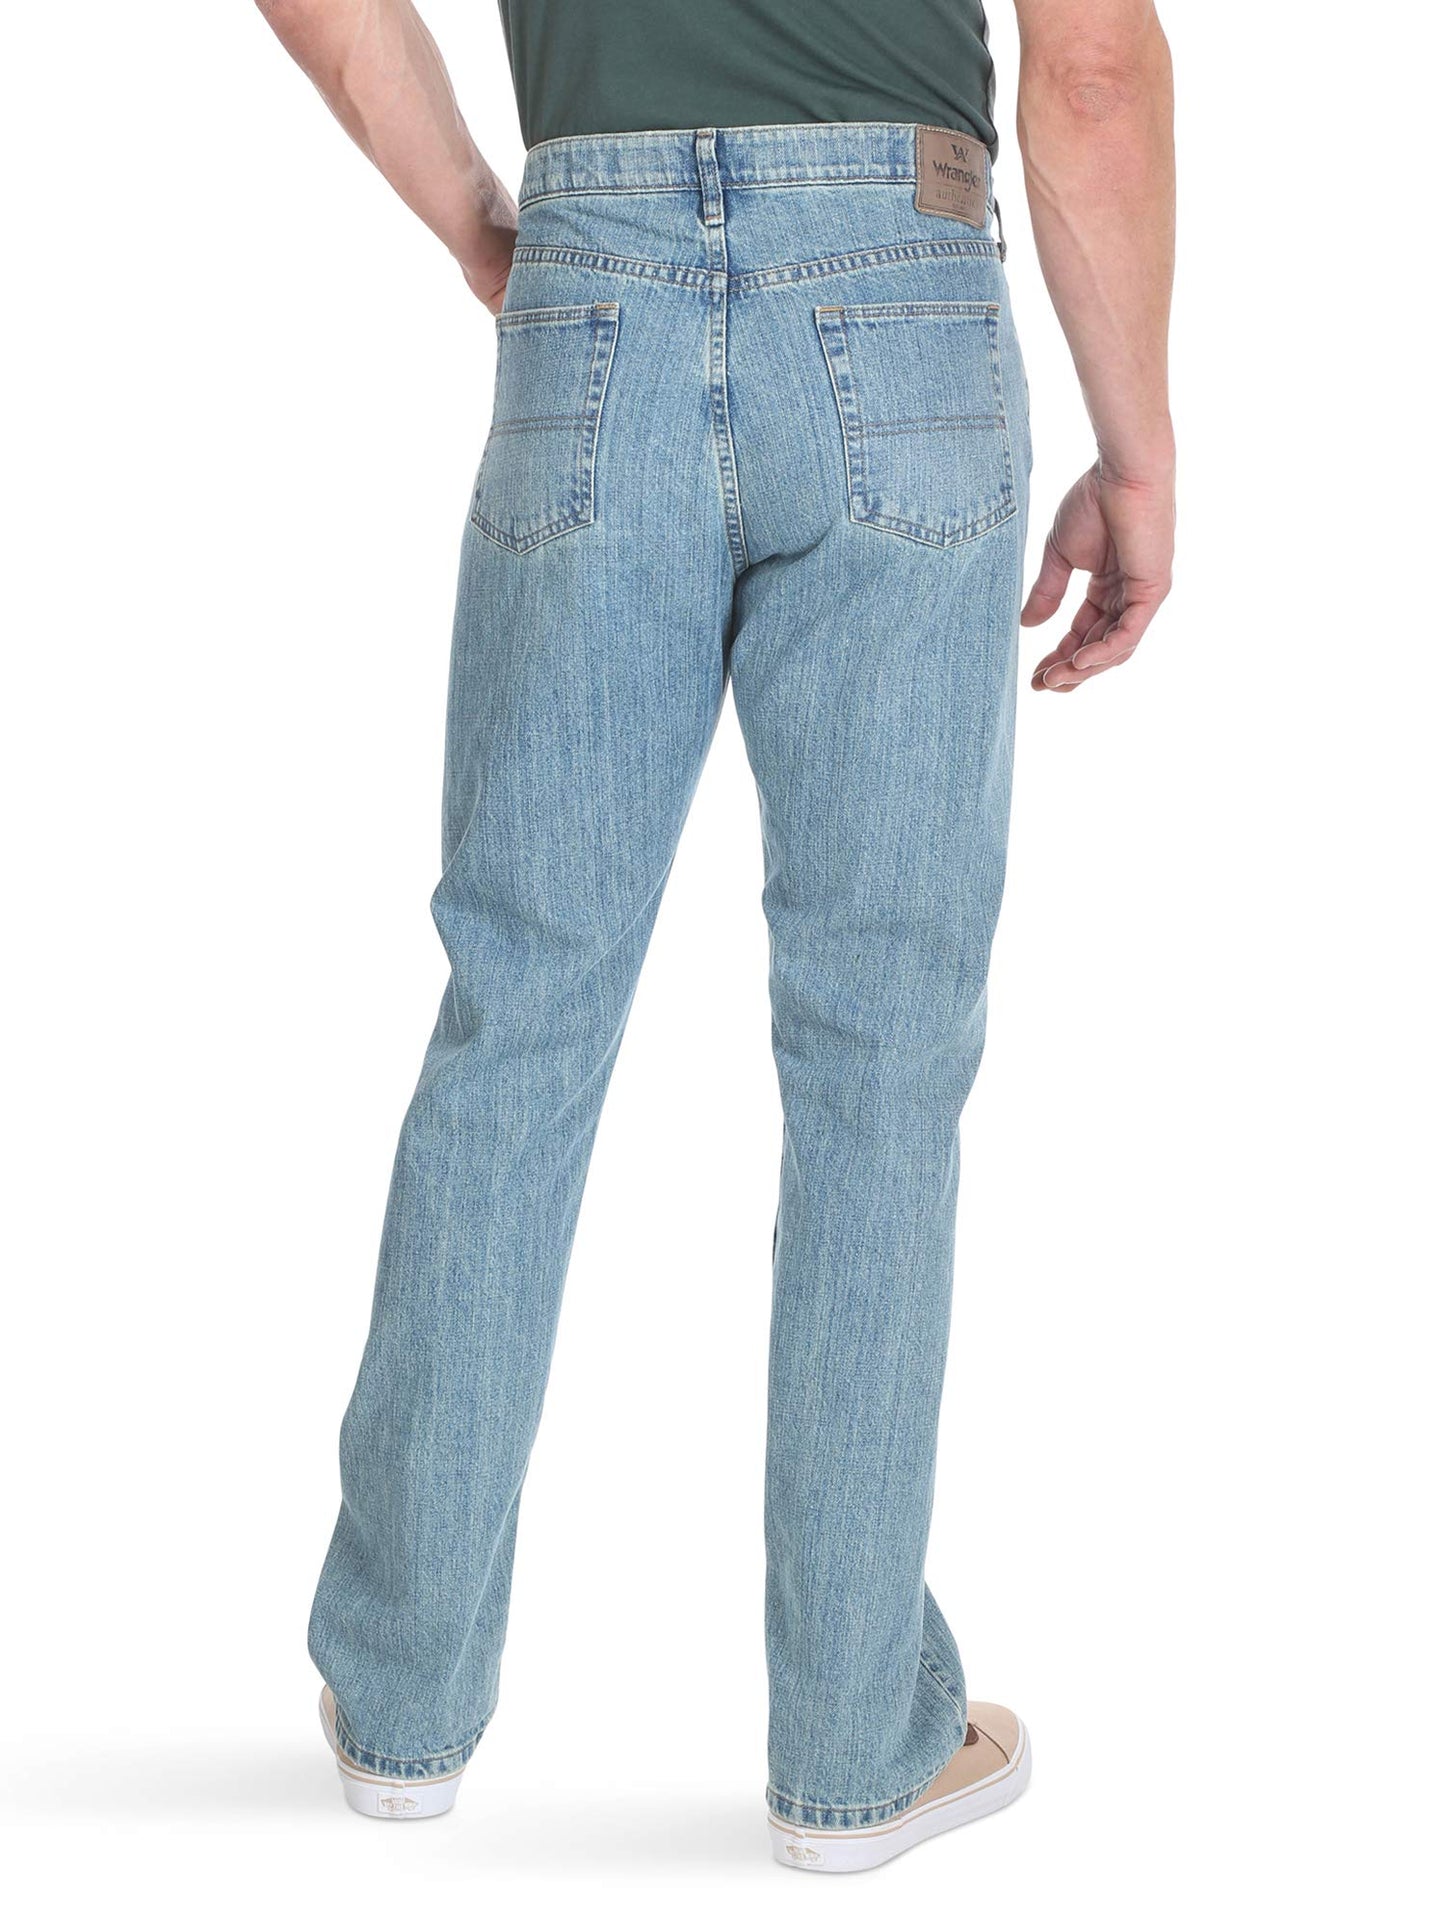 Wrangler Authentics Men's Regular Fit Comfort Flex Waist Jean, Chalk Blue, 30W x 30L